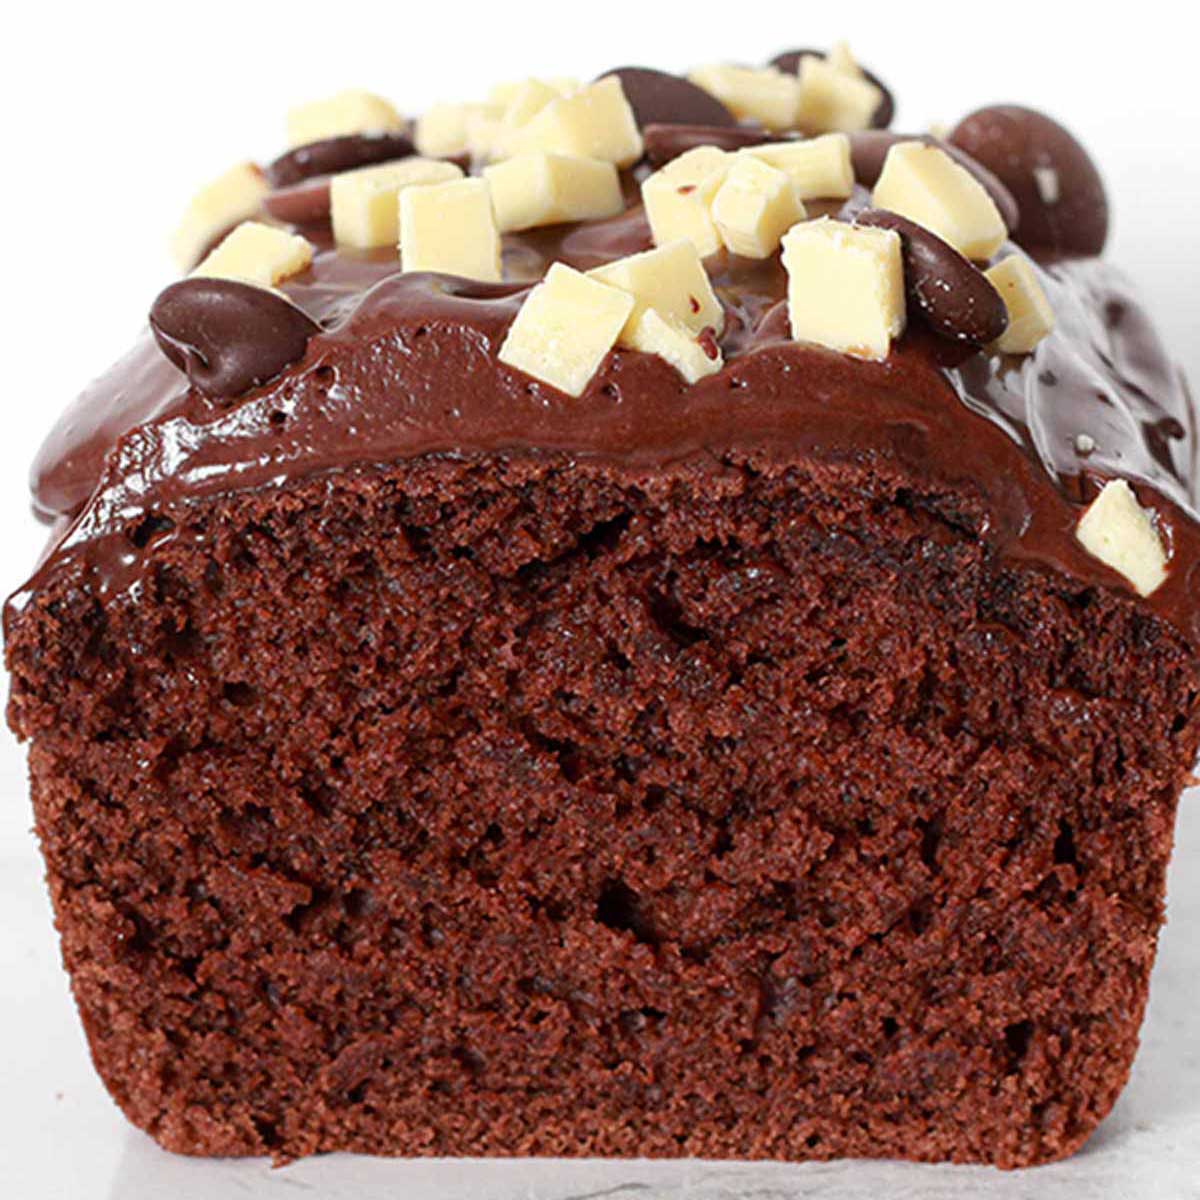 Vegan Chocolate Cake With Chocolate Chunks On Top